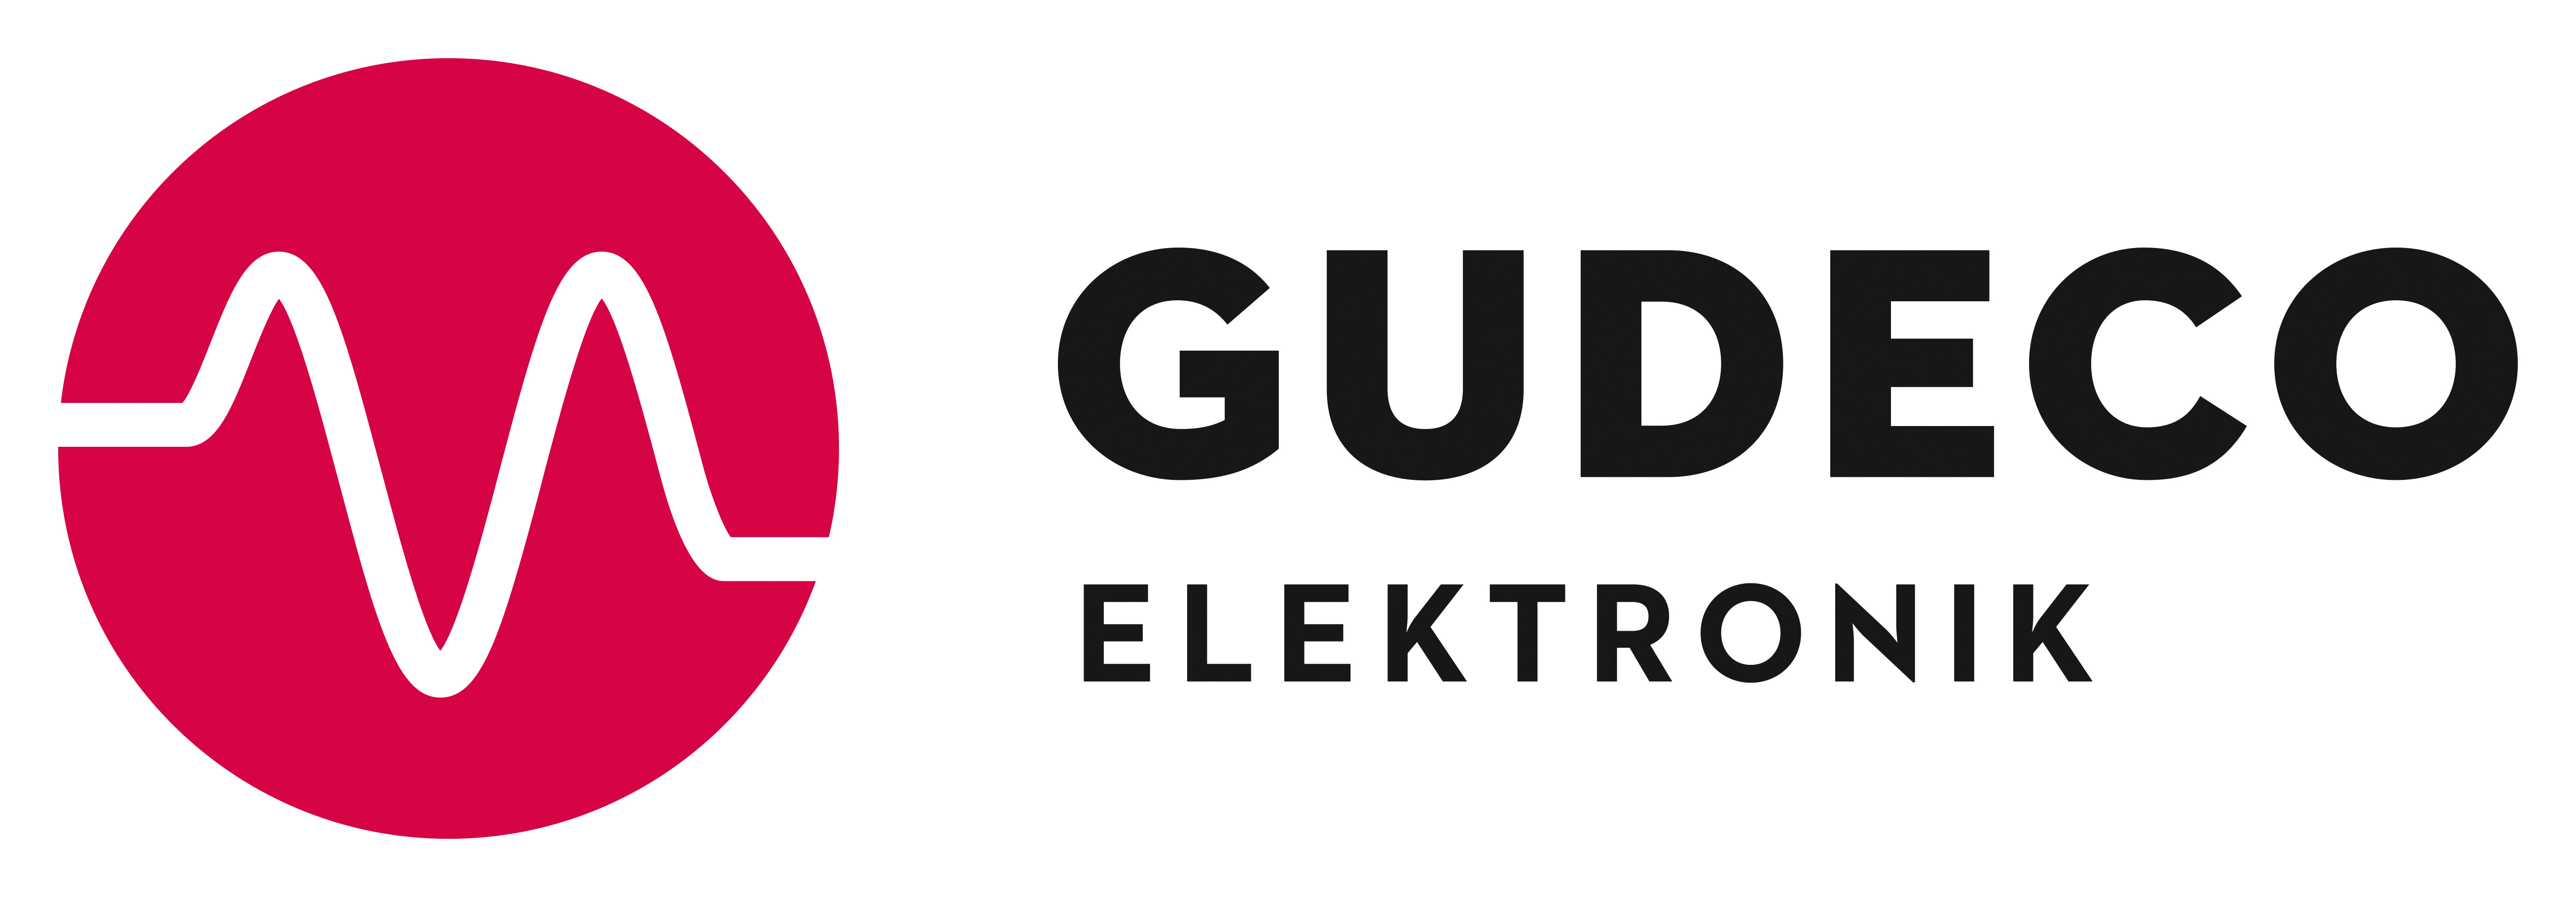 Gudeco Elektronik Handelsgesellschaft mbH